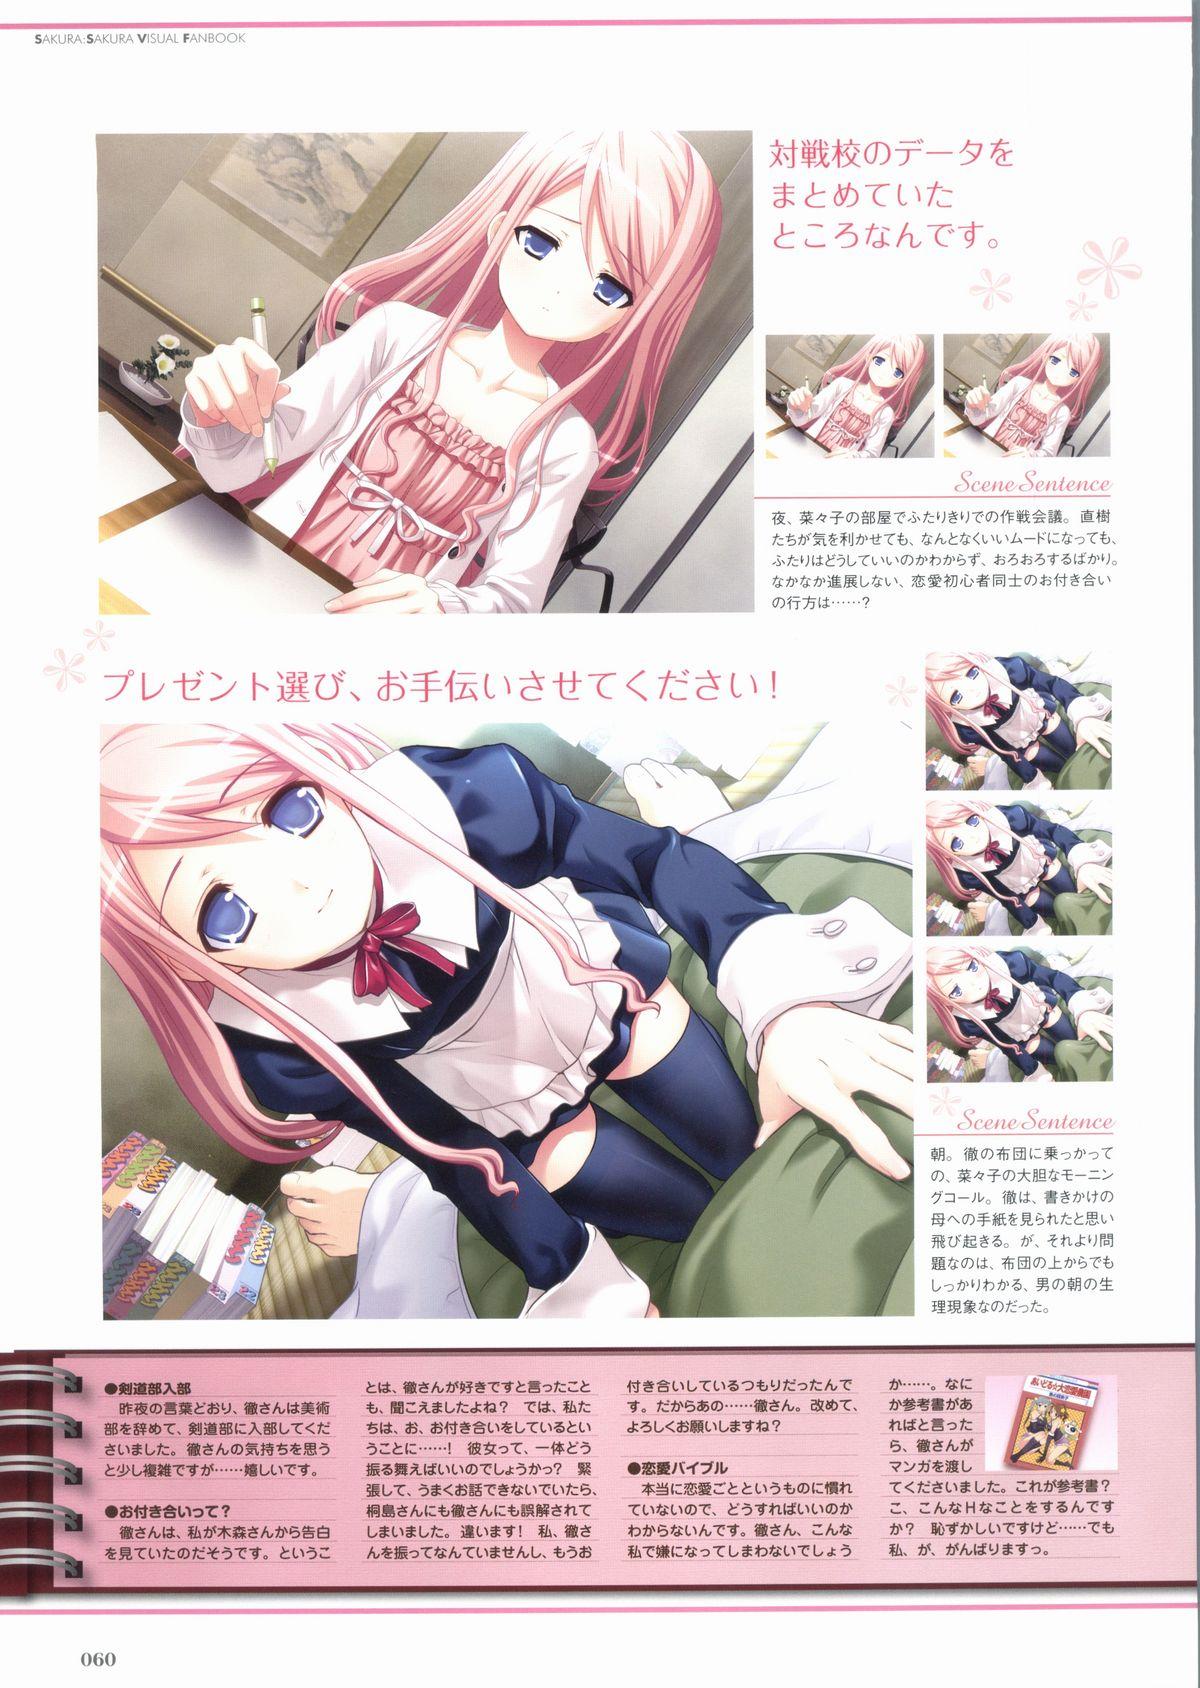 Sakura Sakura Visual Fan Book 64